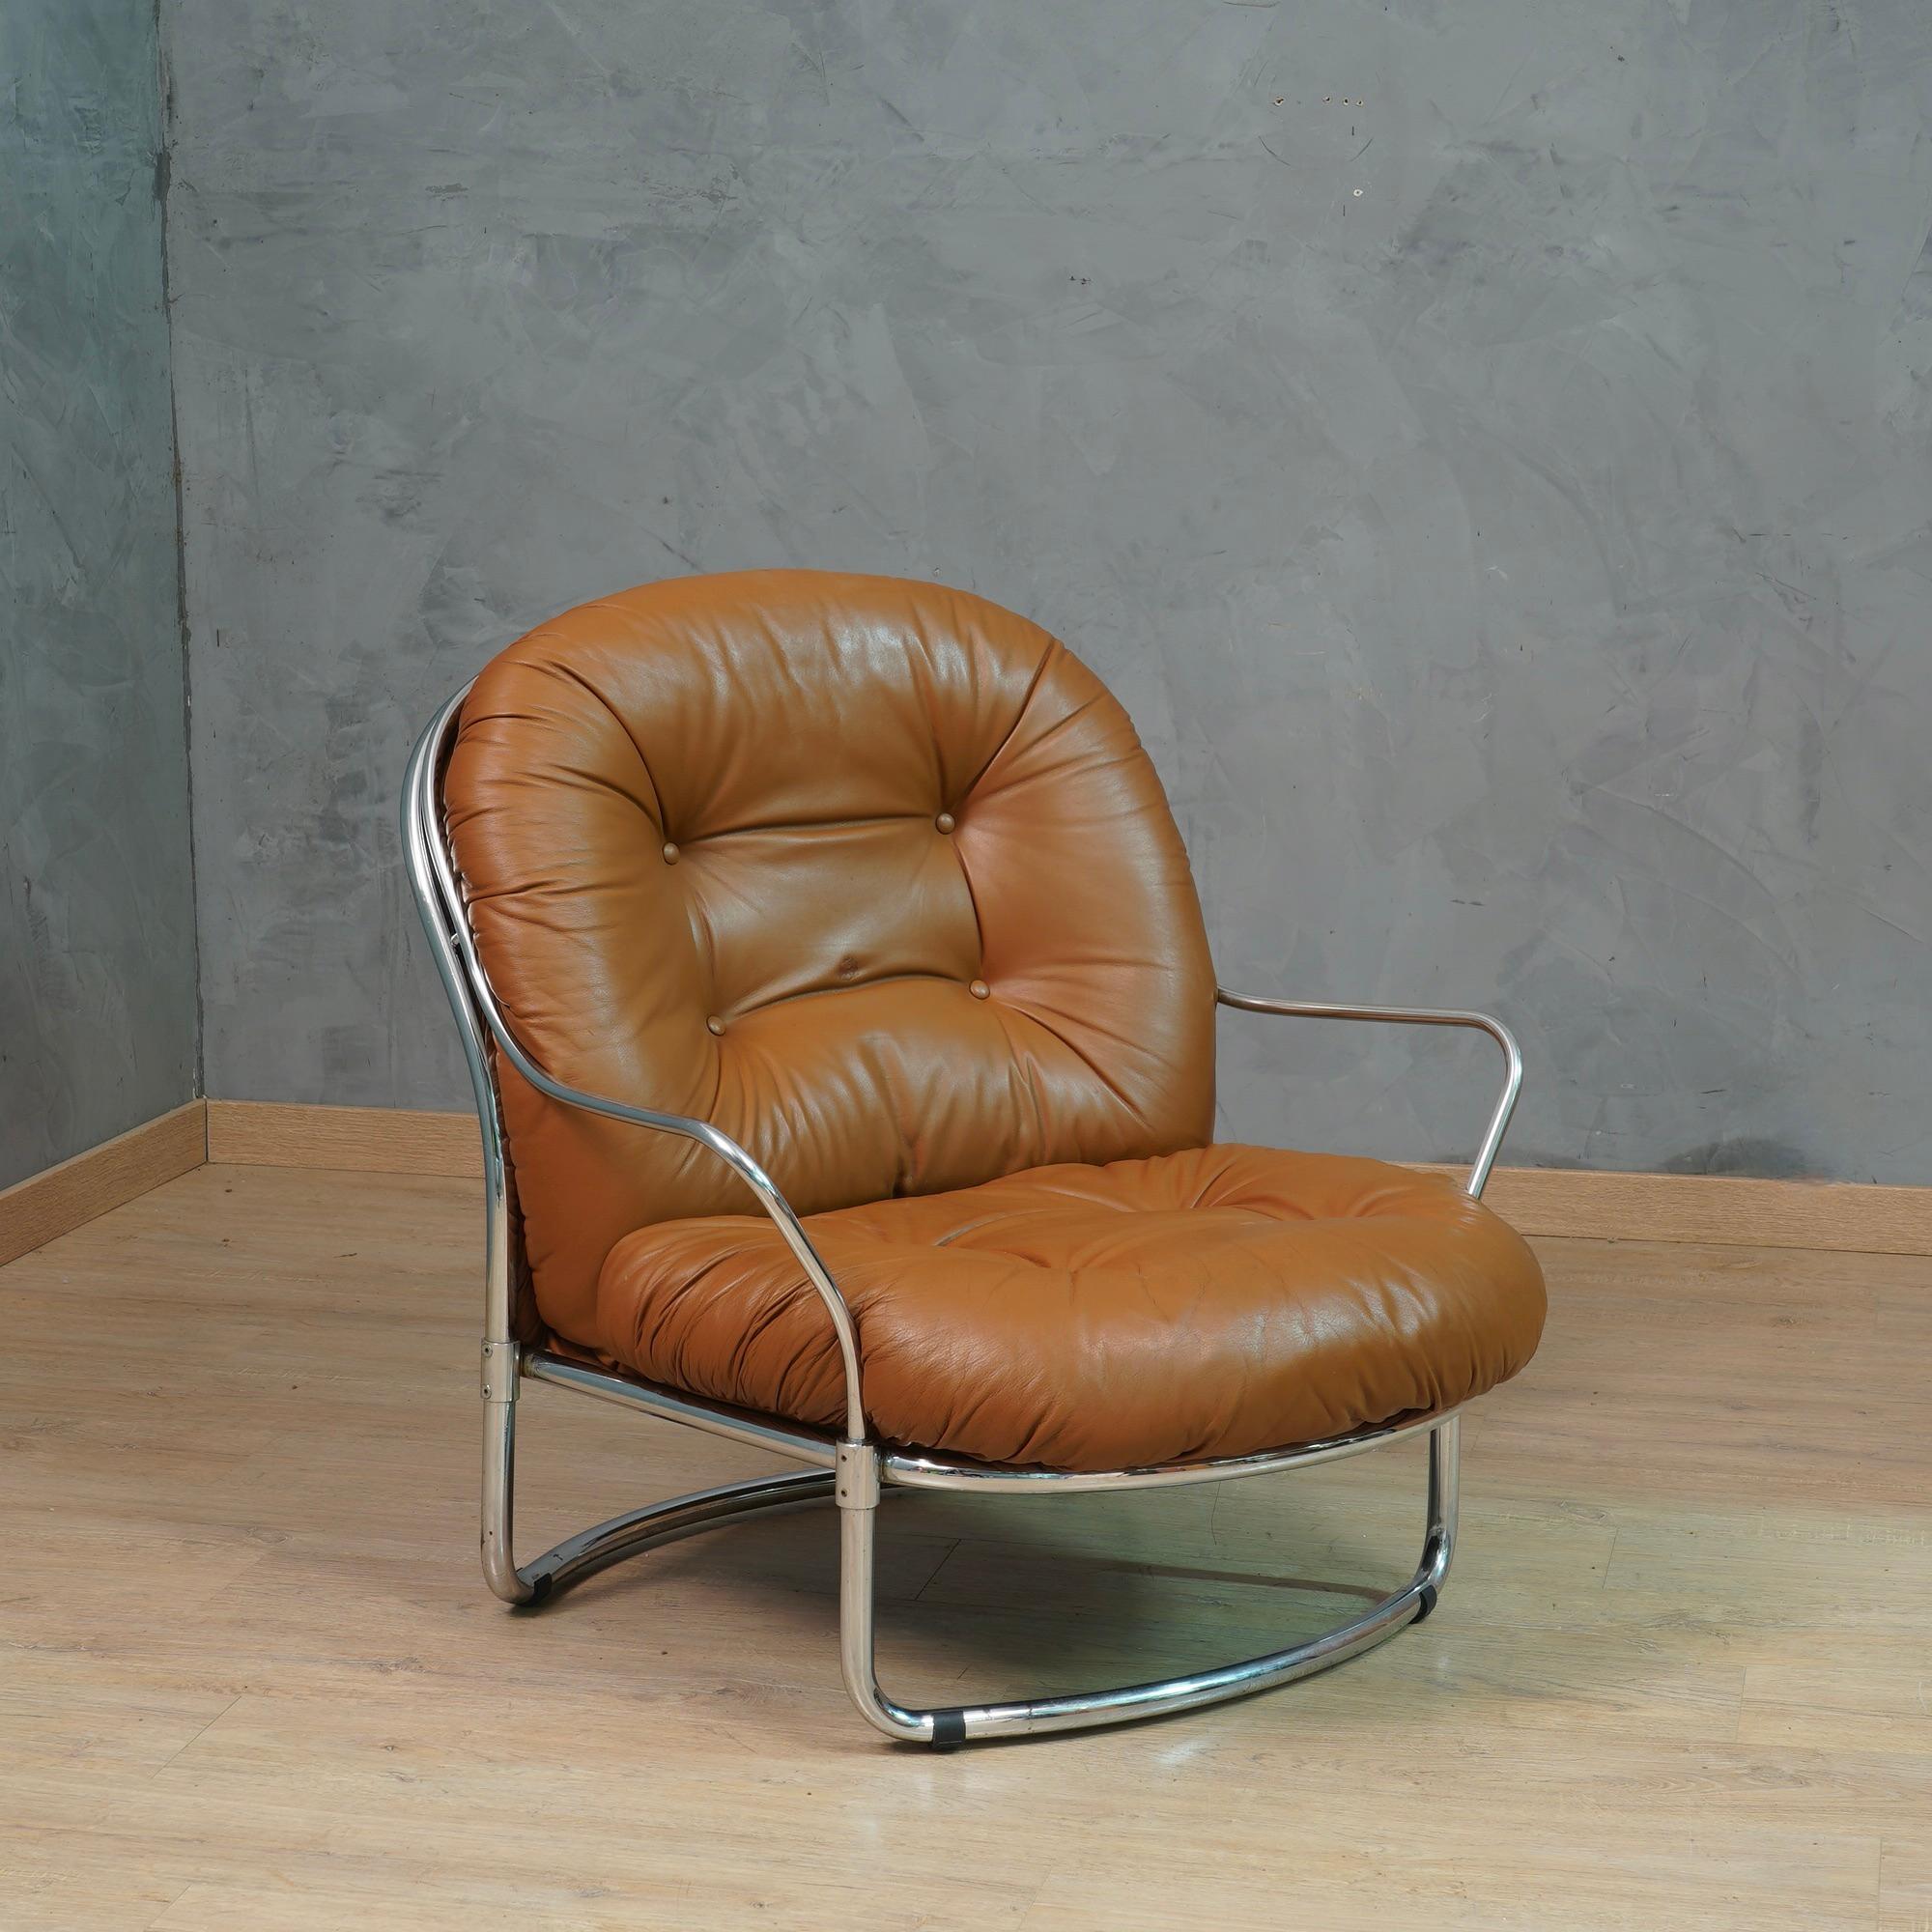 Carlo De Carli for Cinova Mod. 915 Chrome and Brown Leather Arm Chair, 1969 For Sale 1